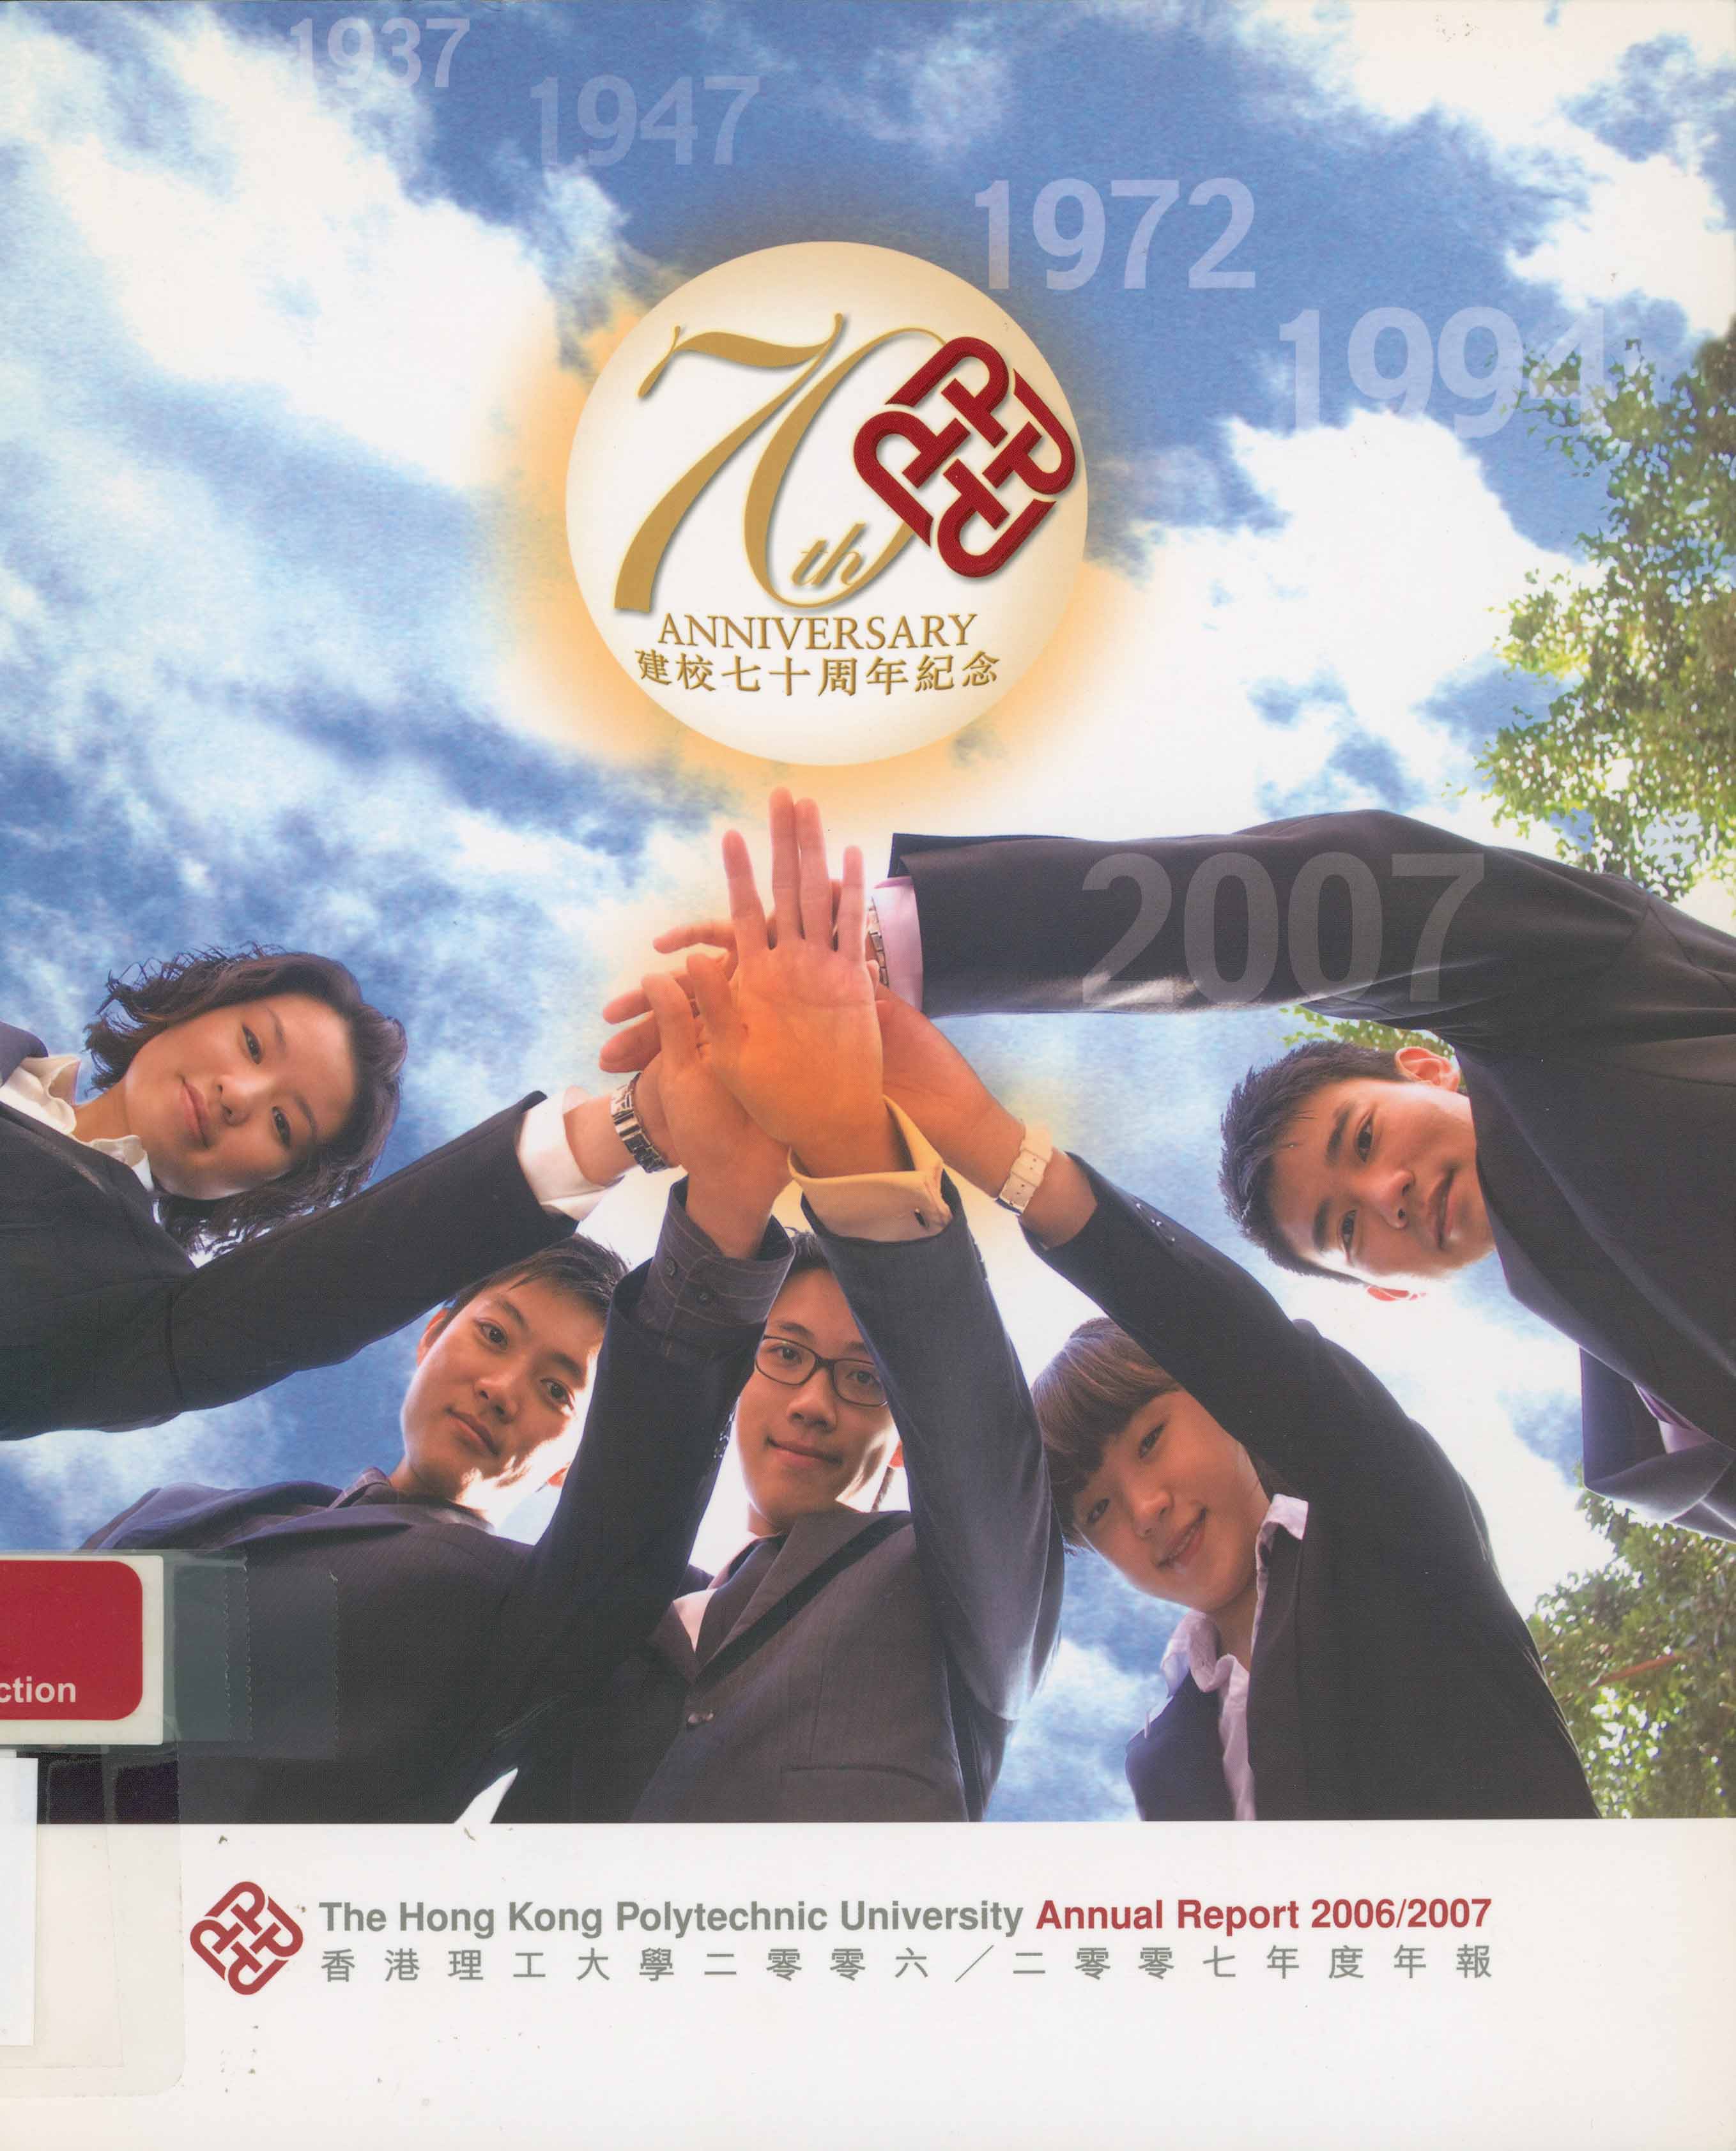 The Hong Kong Polytechnic University Annual Report 2006/07